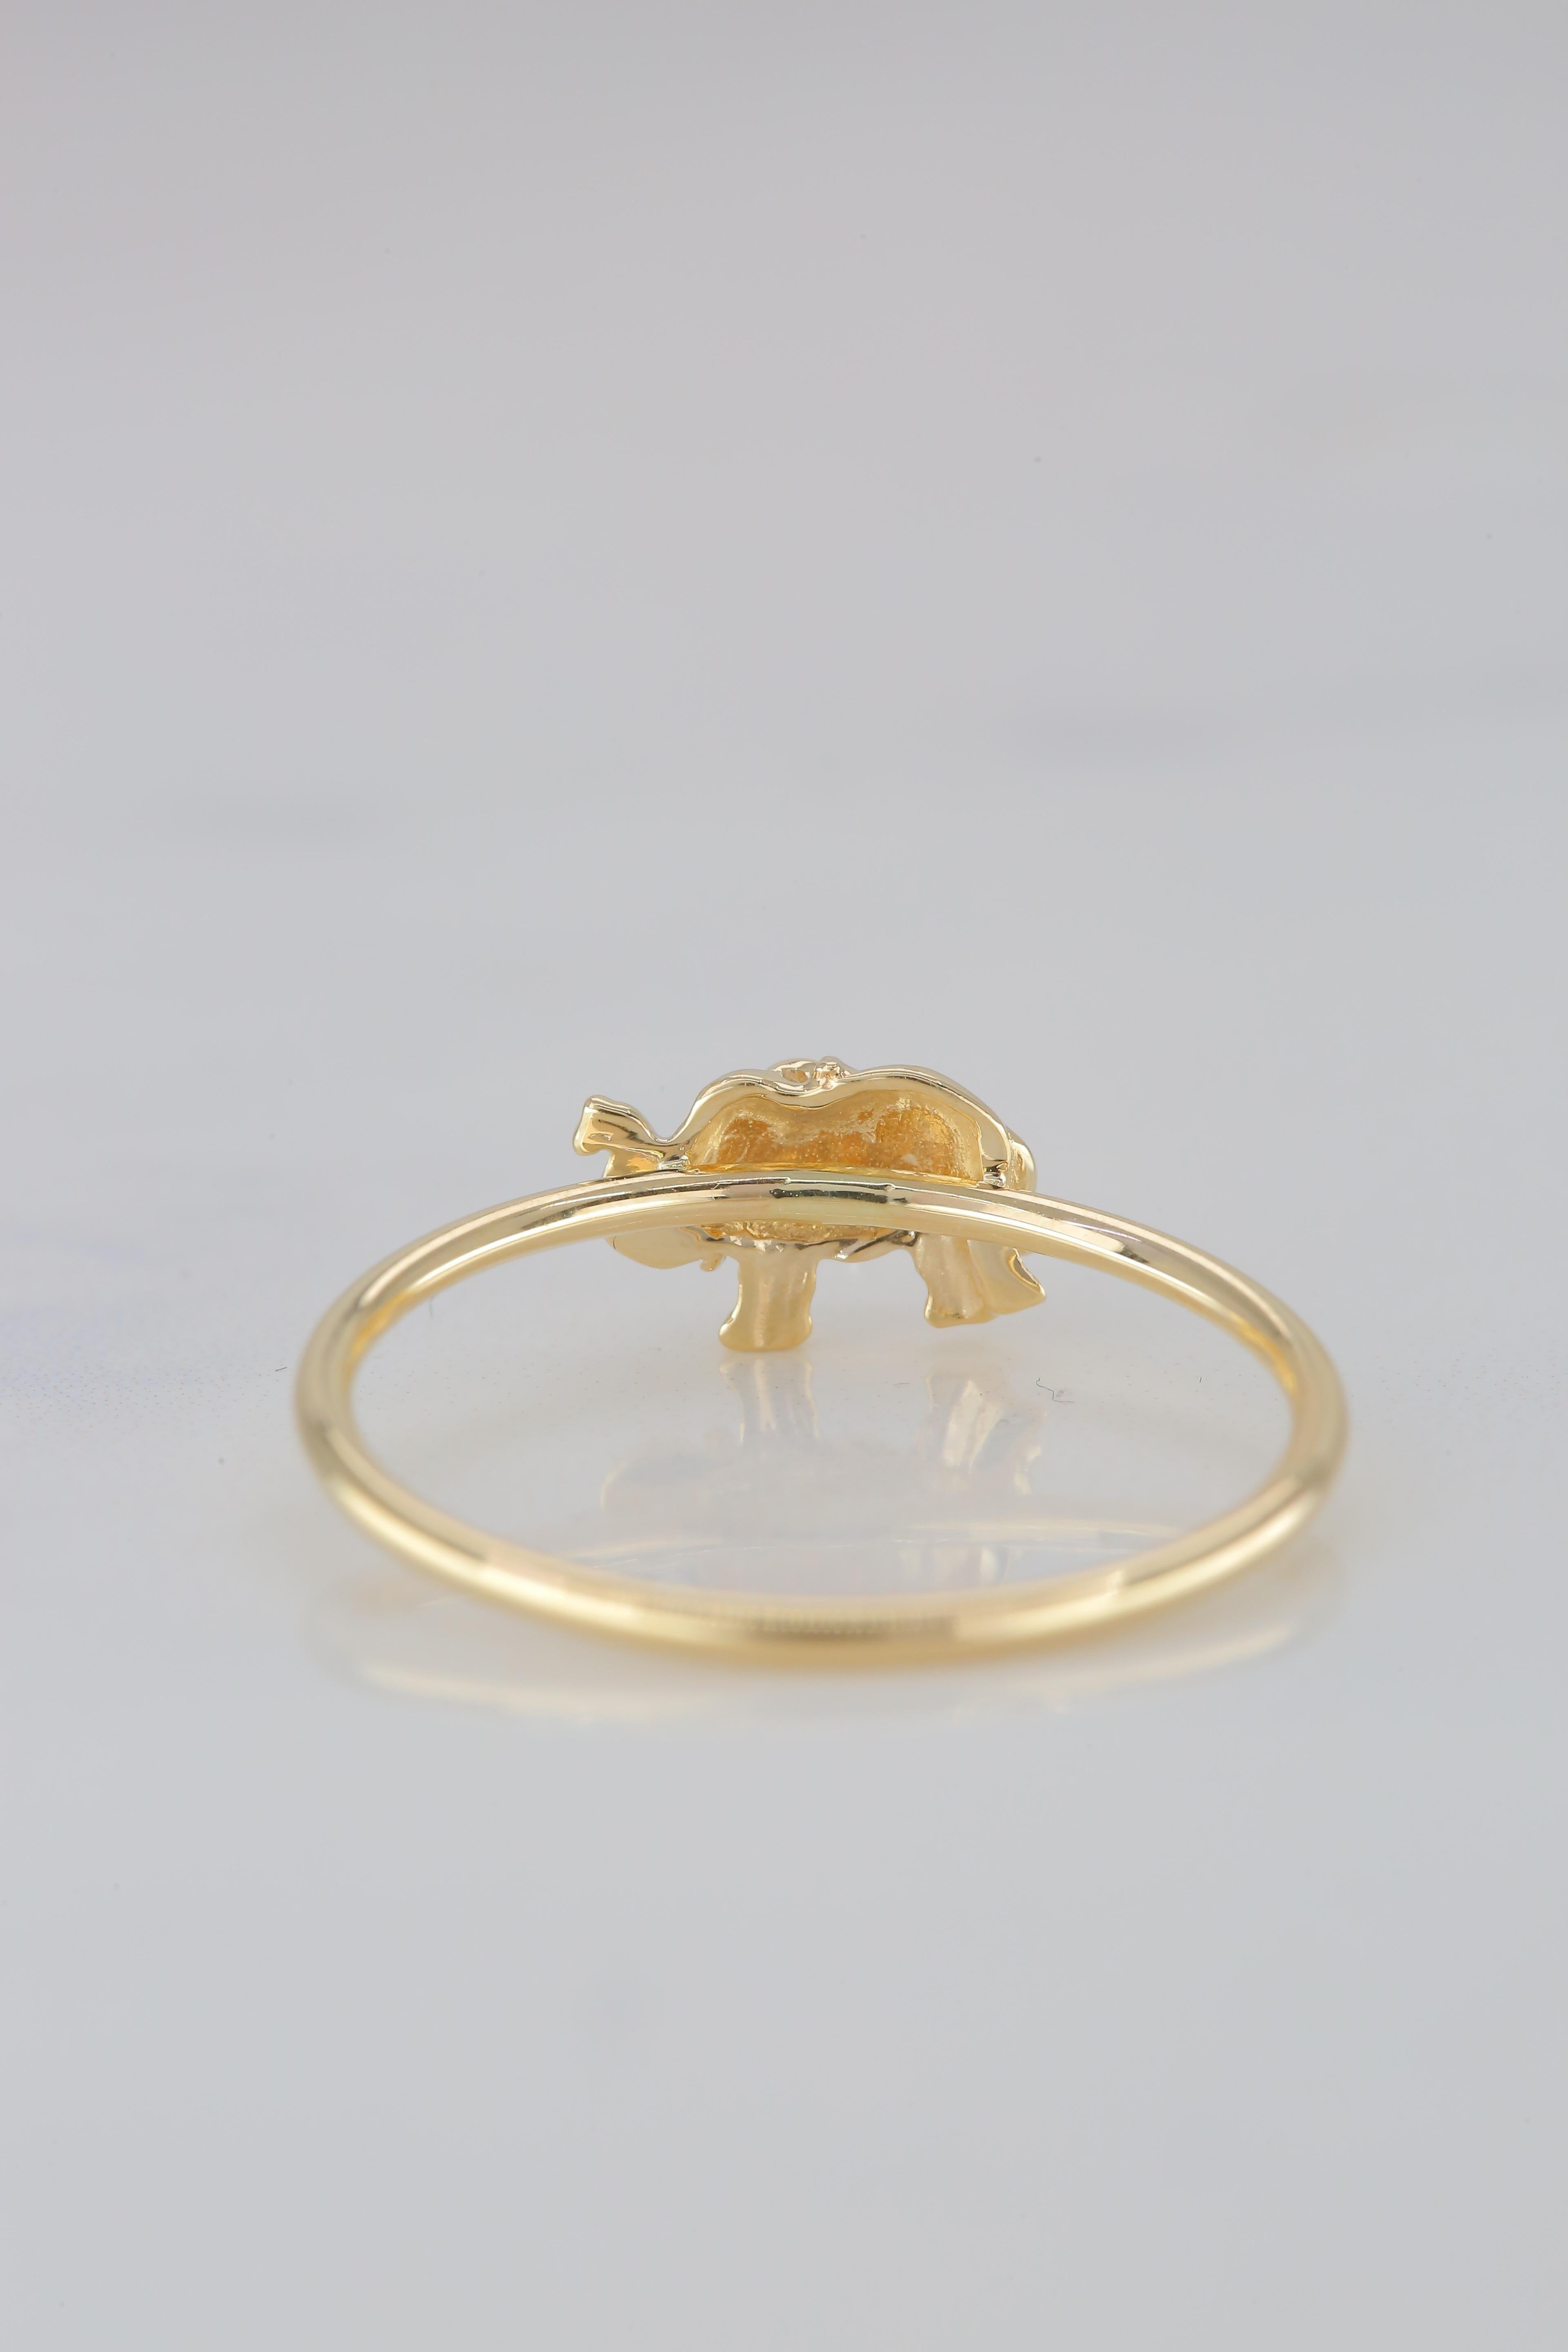 Im Angebot: 14K Gold Elefantenring, Rosay Elephant Ring, 14K Gold Elefanten-Tierring () 6